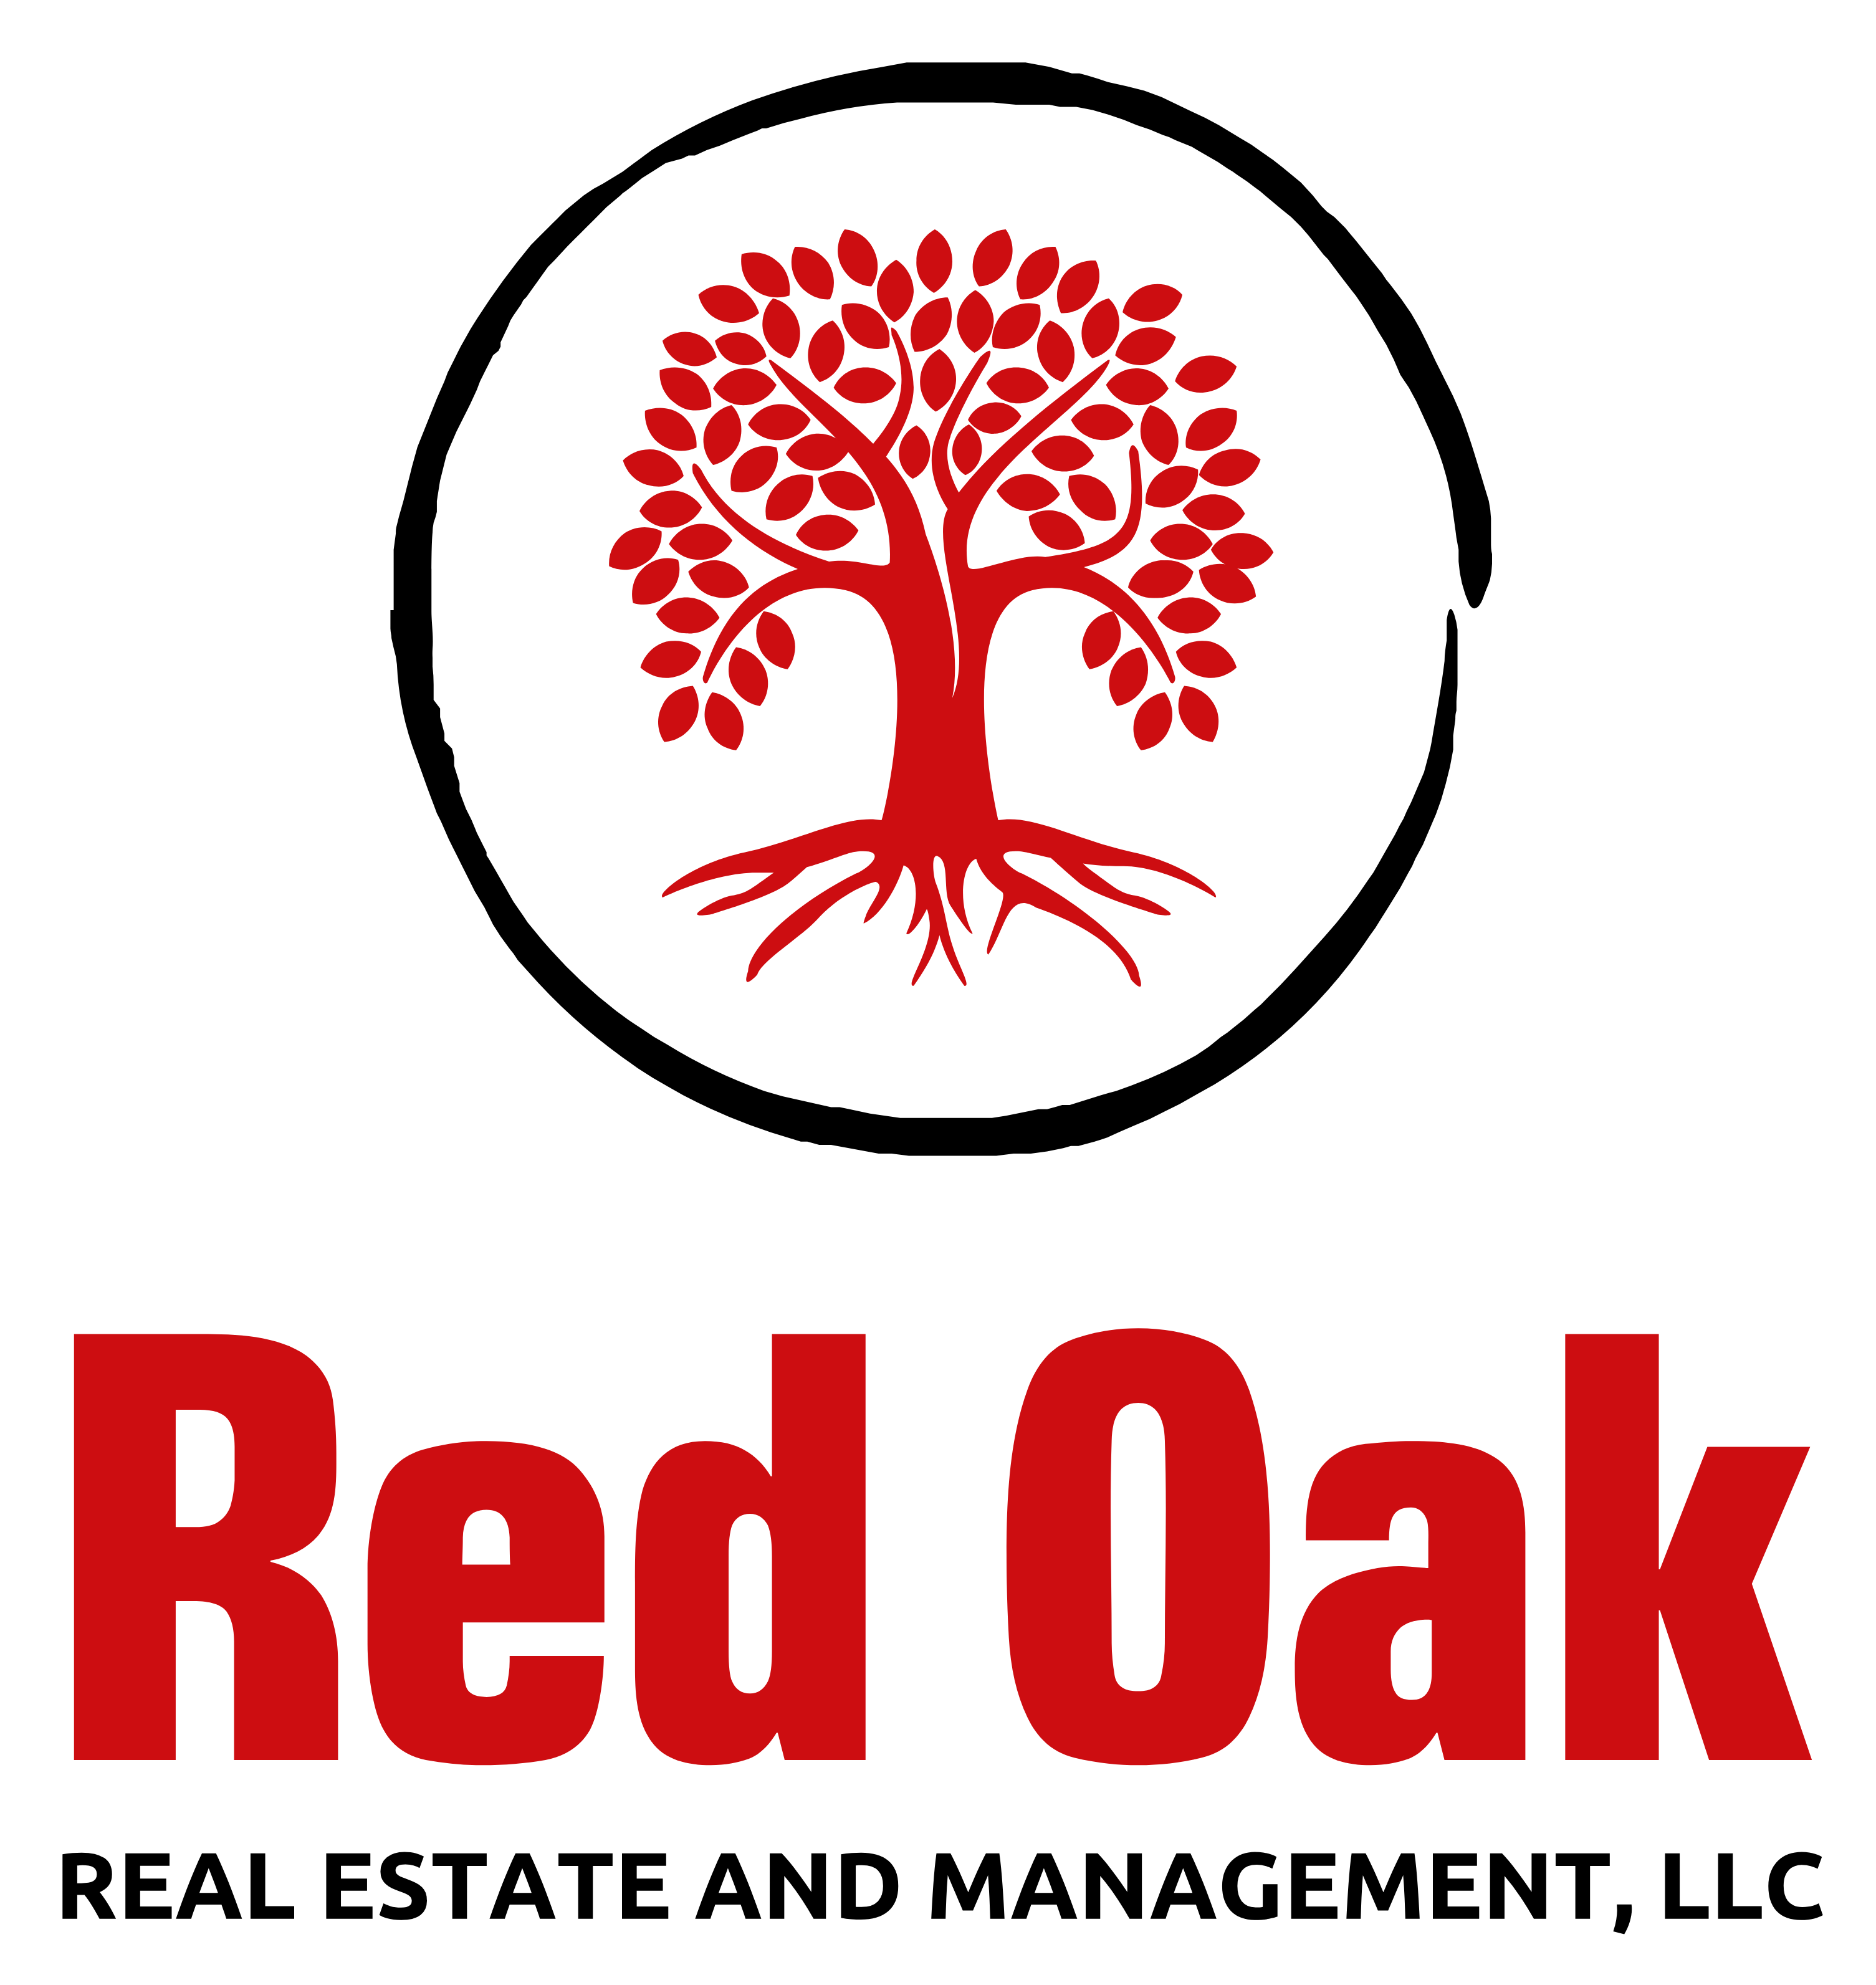 Red Oak Real Estate and Management, LLC